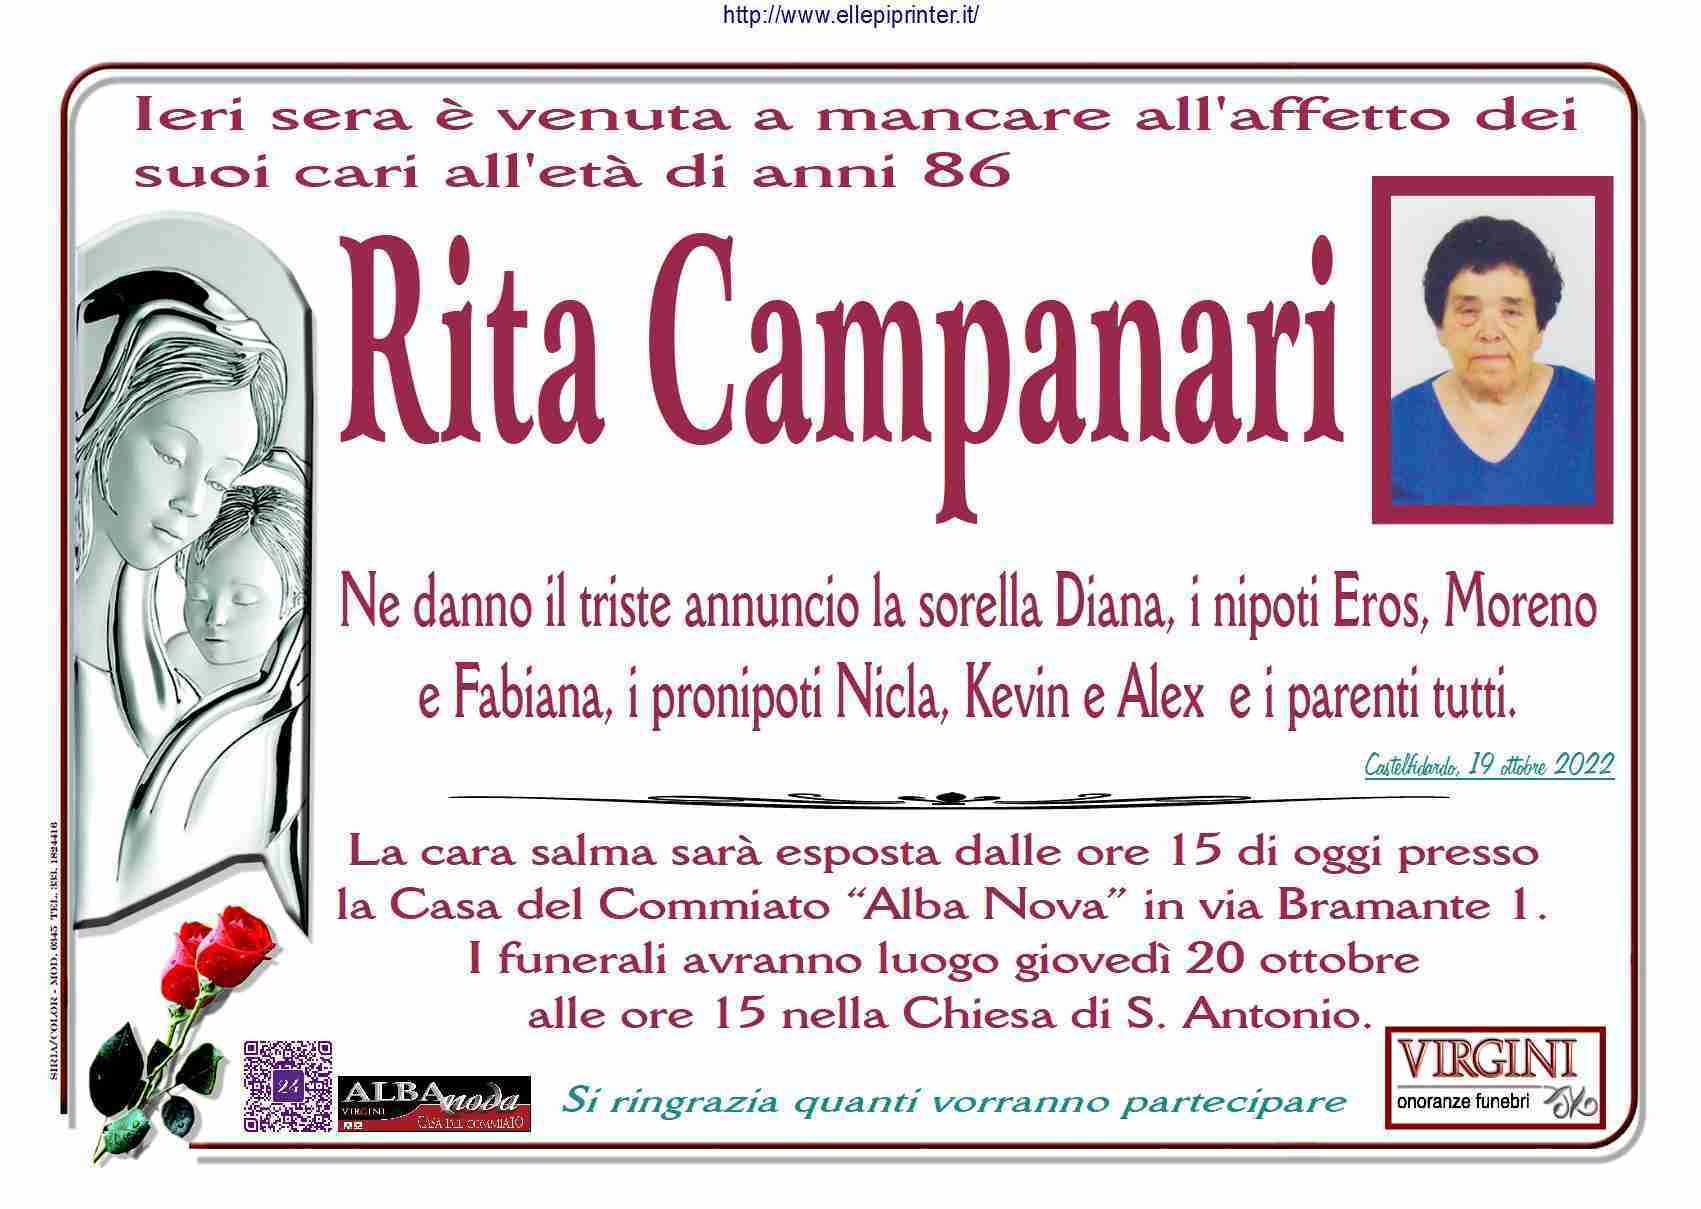 Rita Campanari